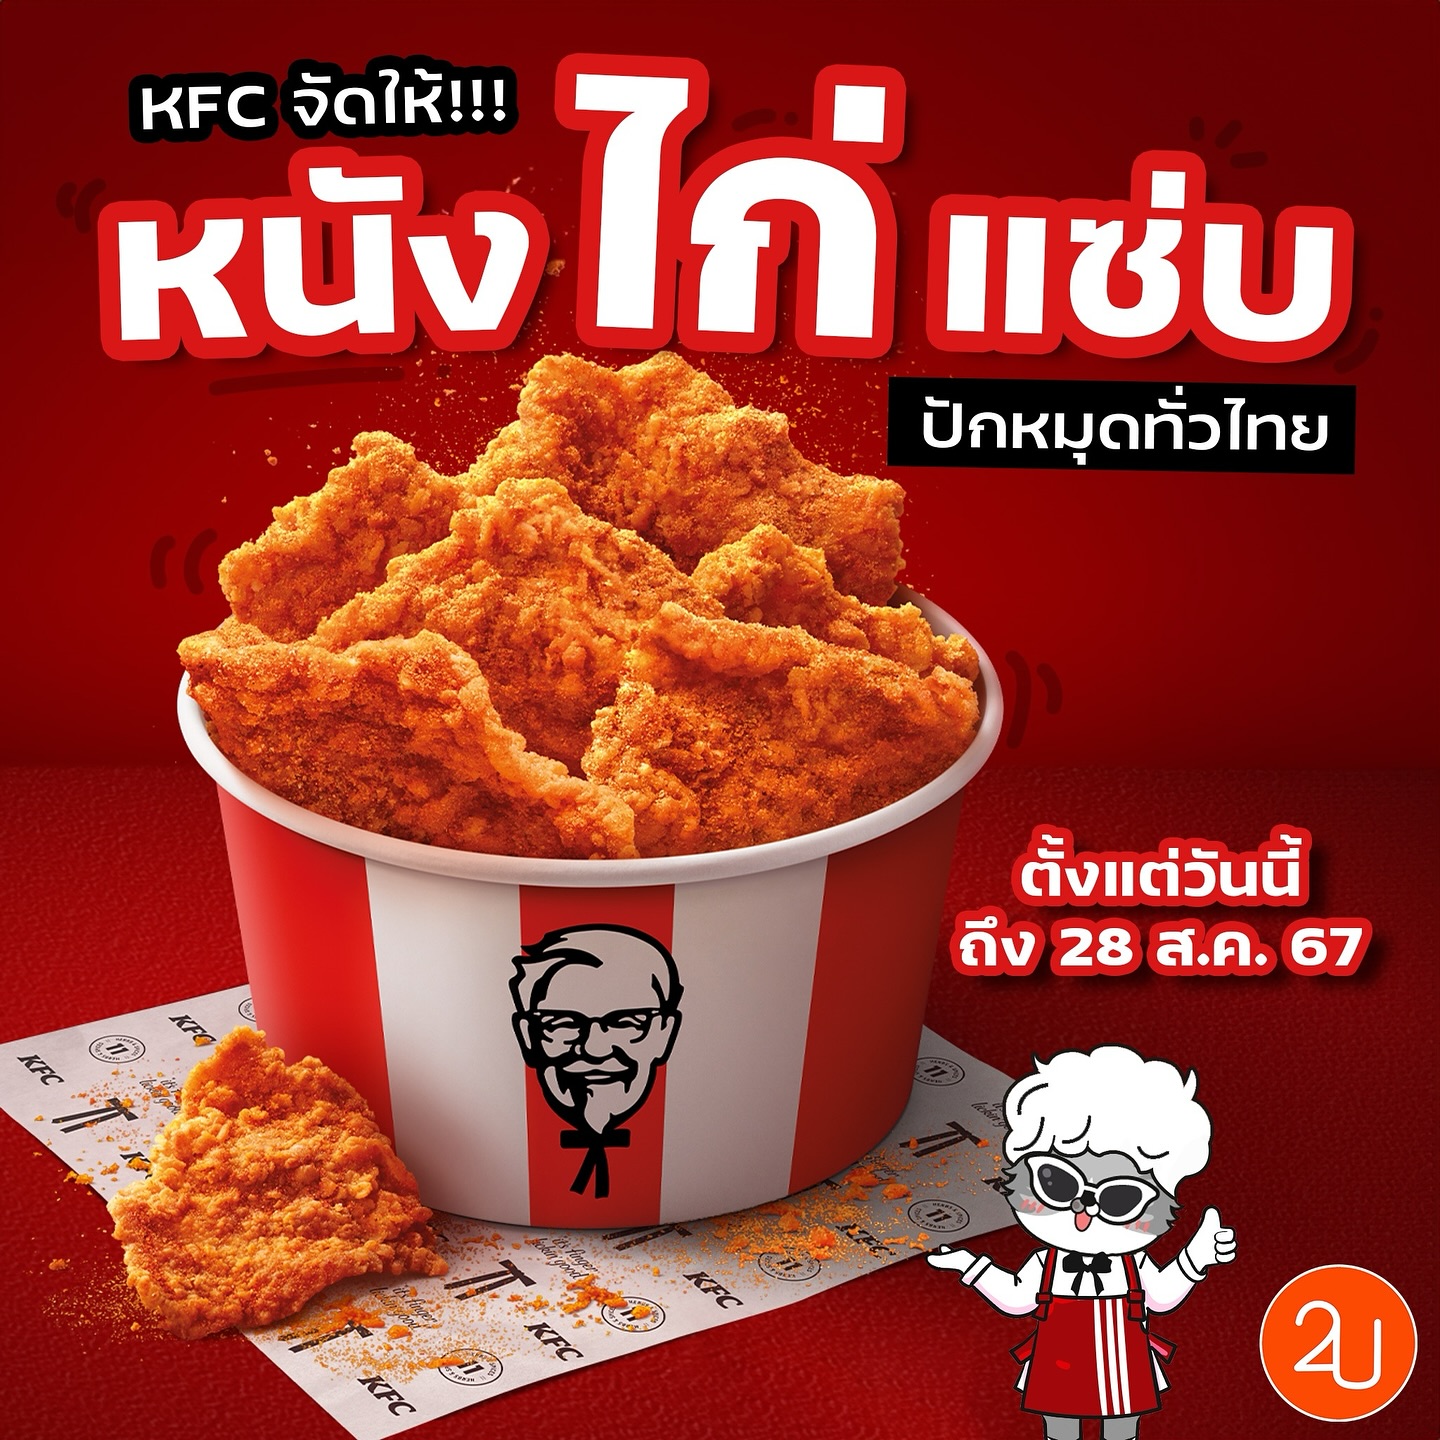 KFC จัดให้!!! หนังไก่แซ่บ ปักหมุดขายทั่วไทย!!